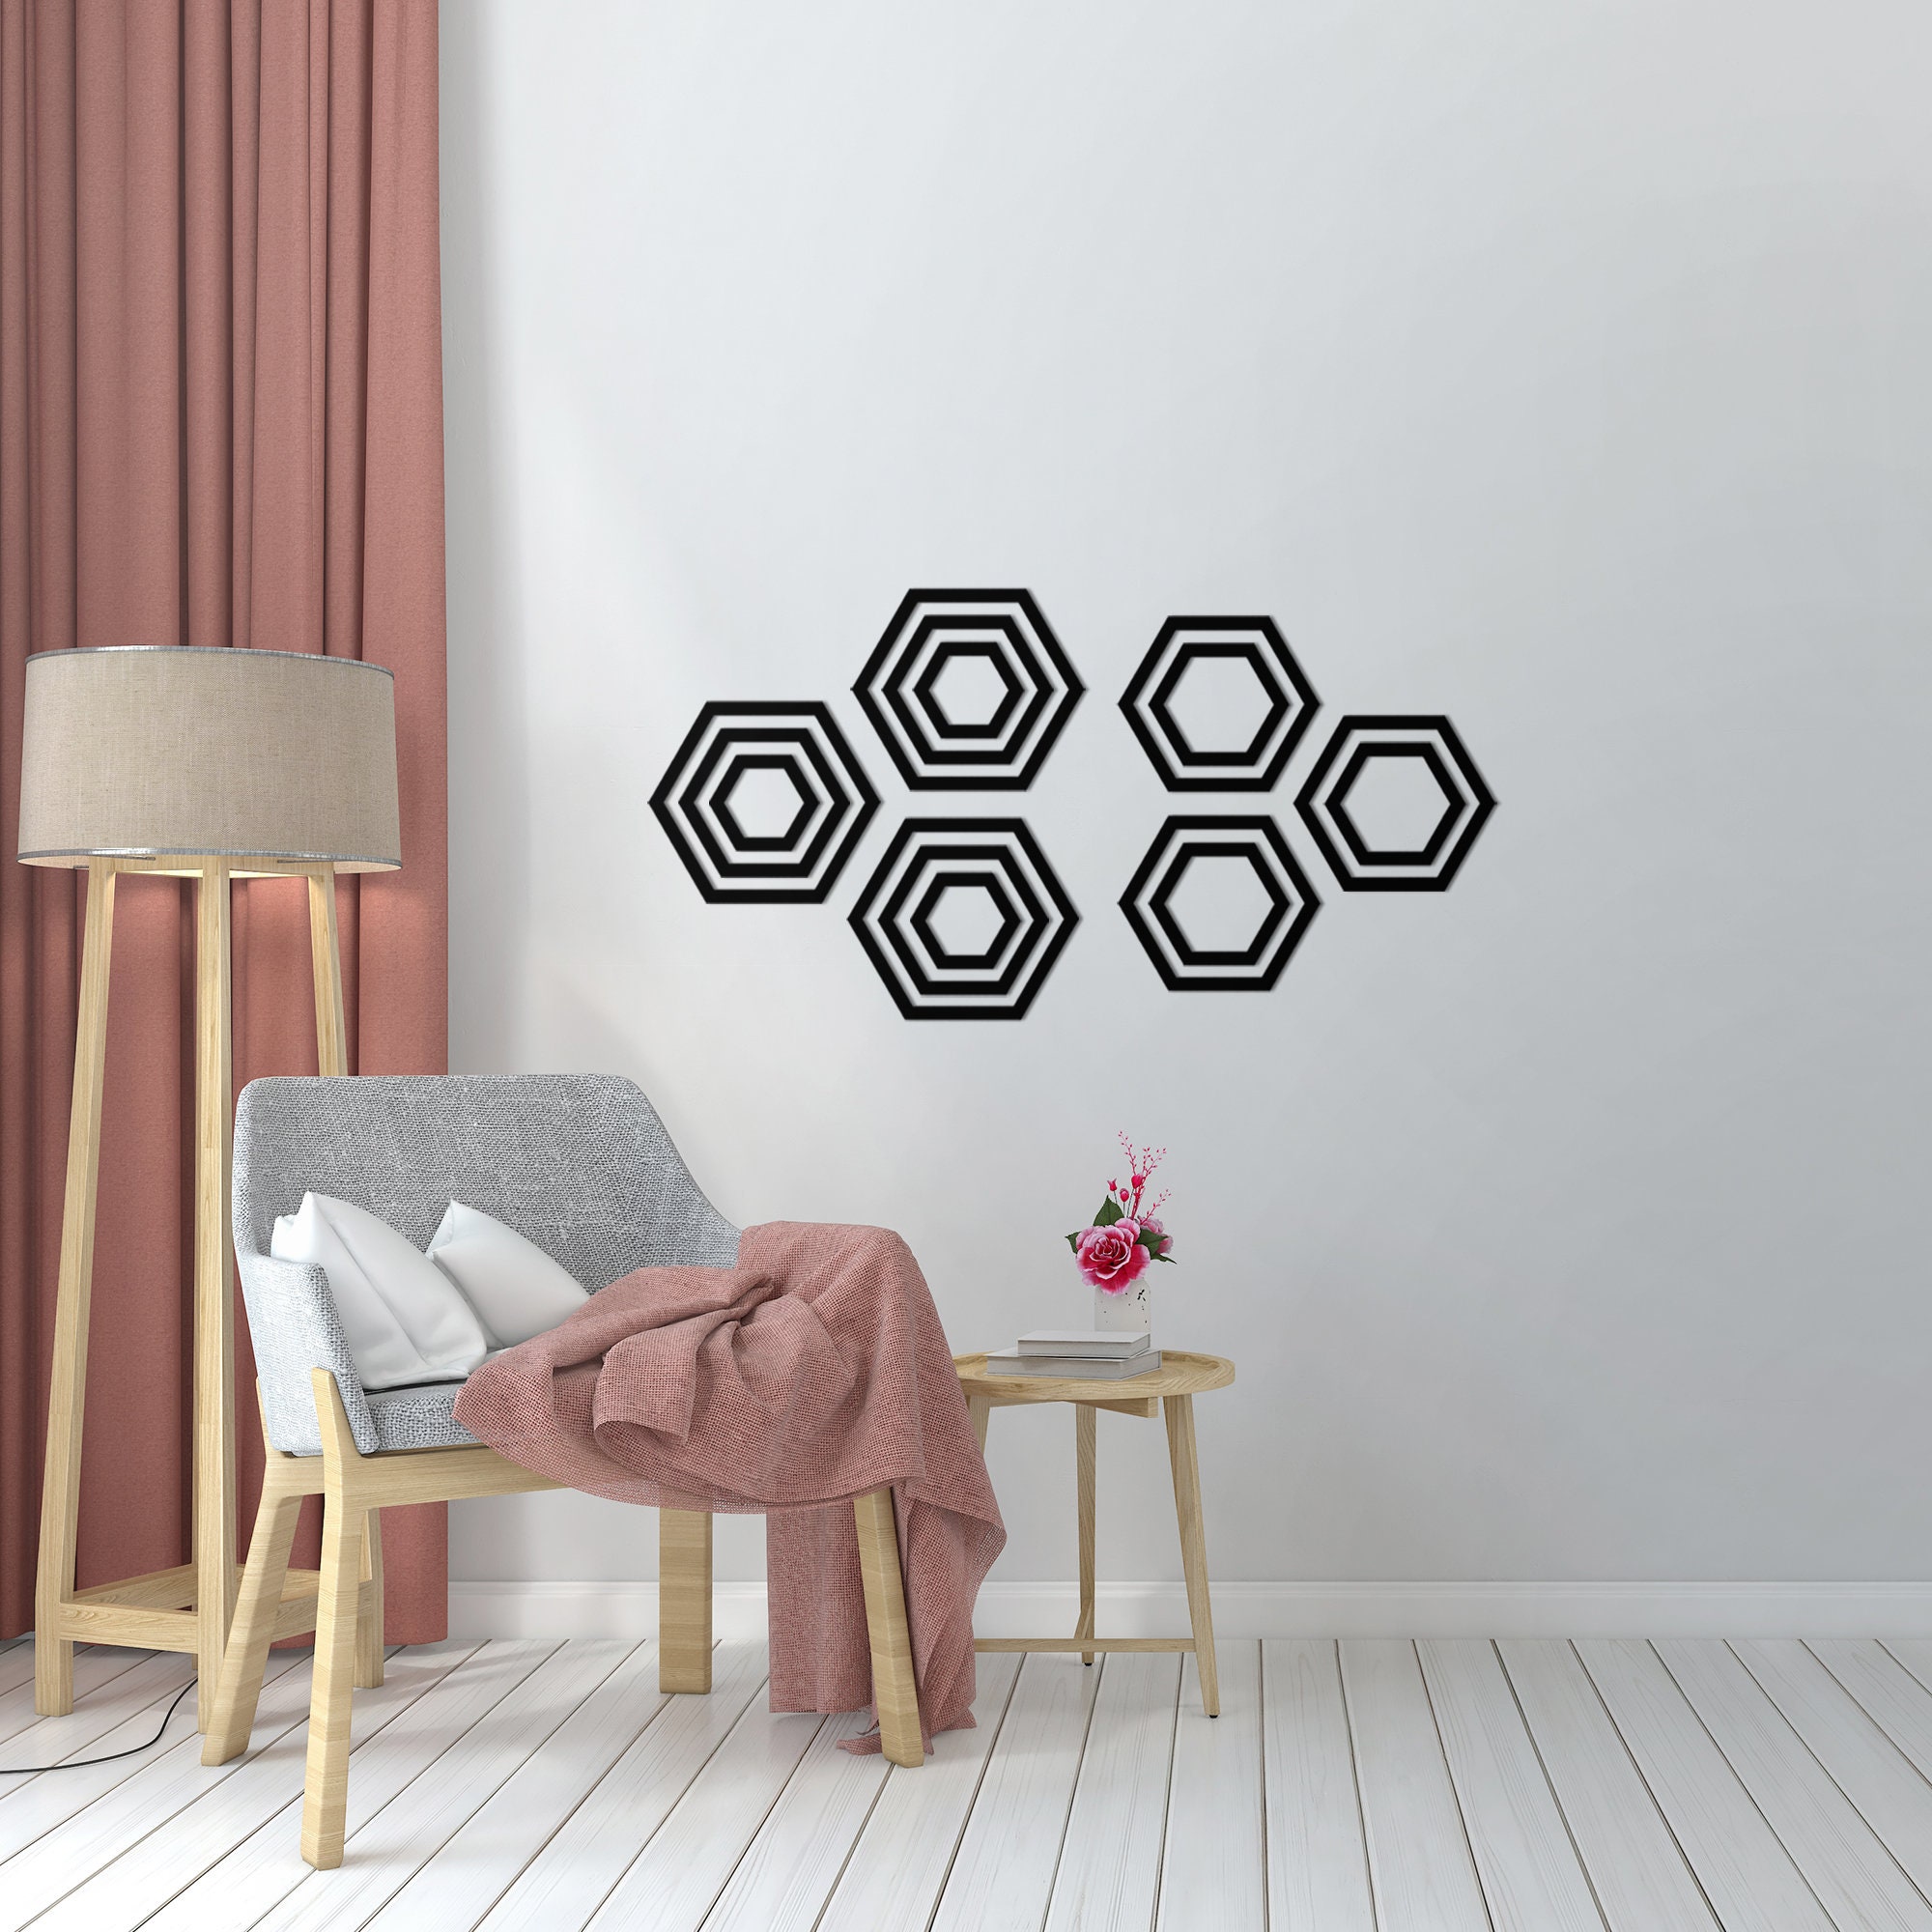 Set of 15 the Hexagon - Wall Decor Wall Etsy Modern Livingroom Wall Decor Gift Housewarming Art Metal for Minimalist